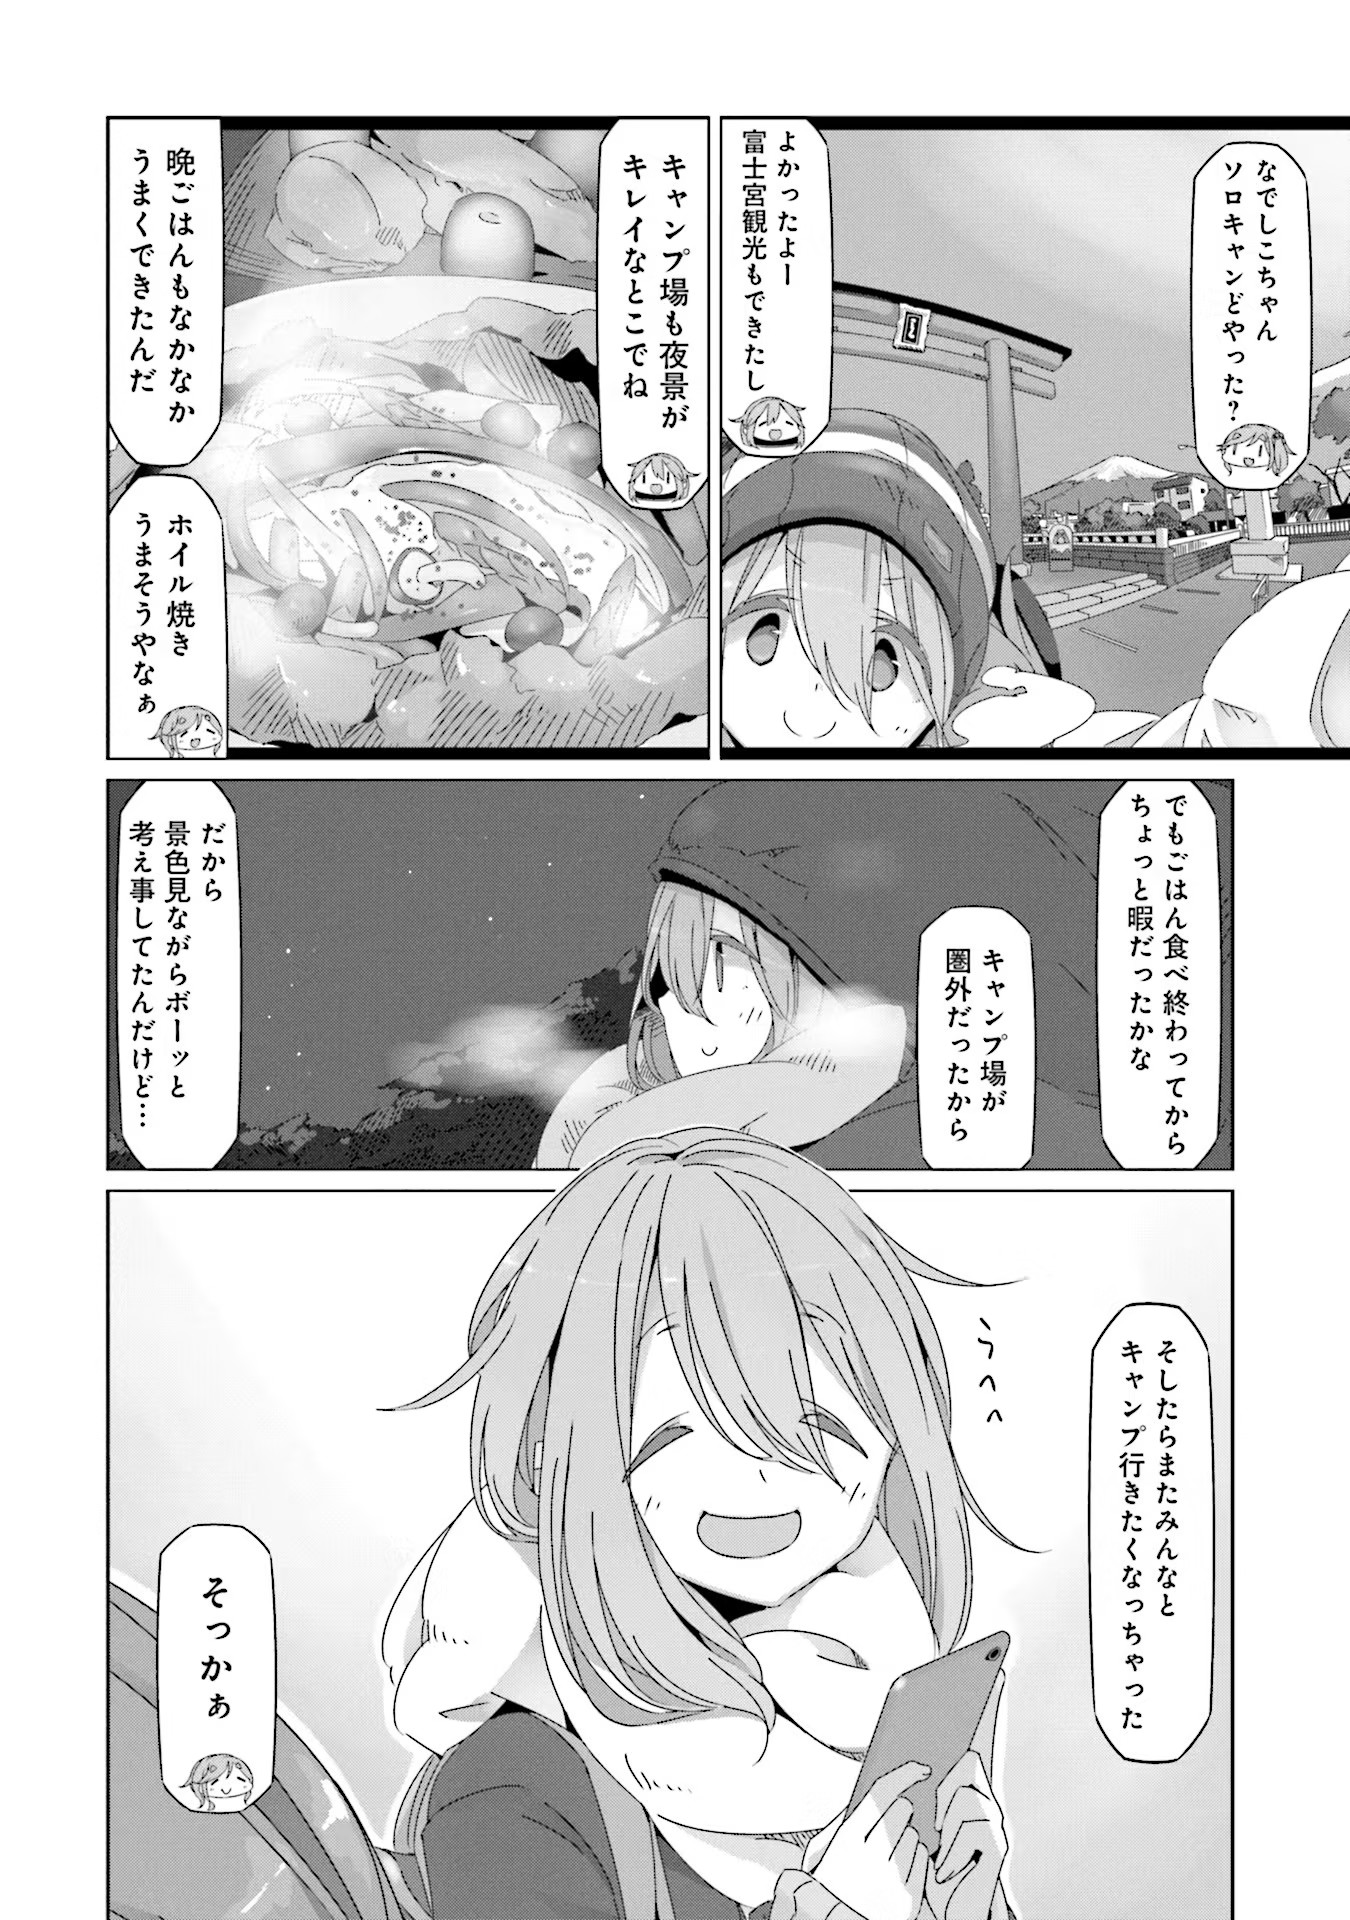 Yuru Camp - Chapter 40 - Page 2